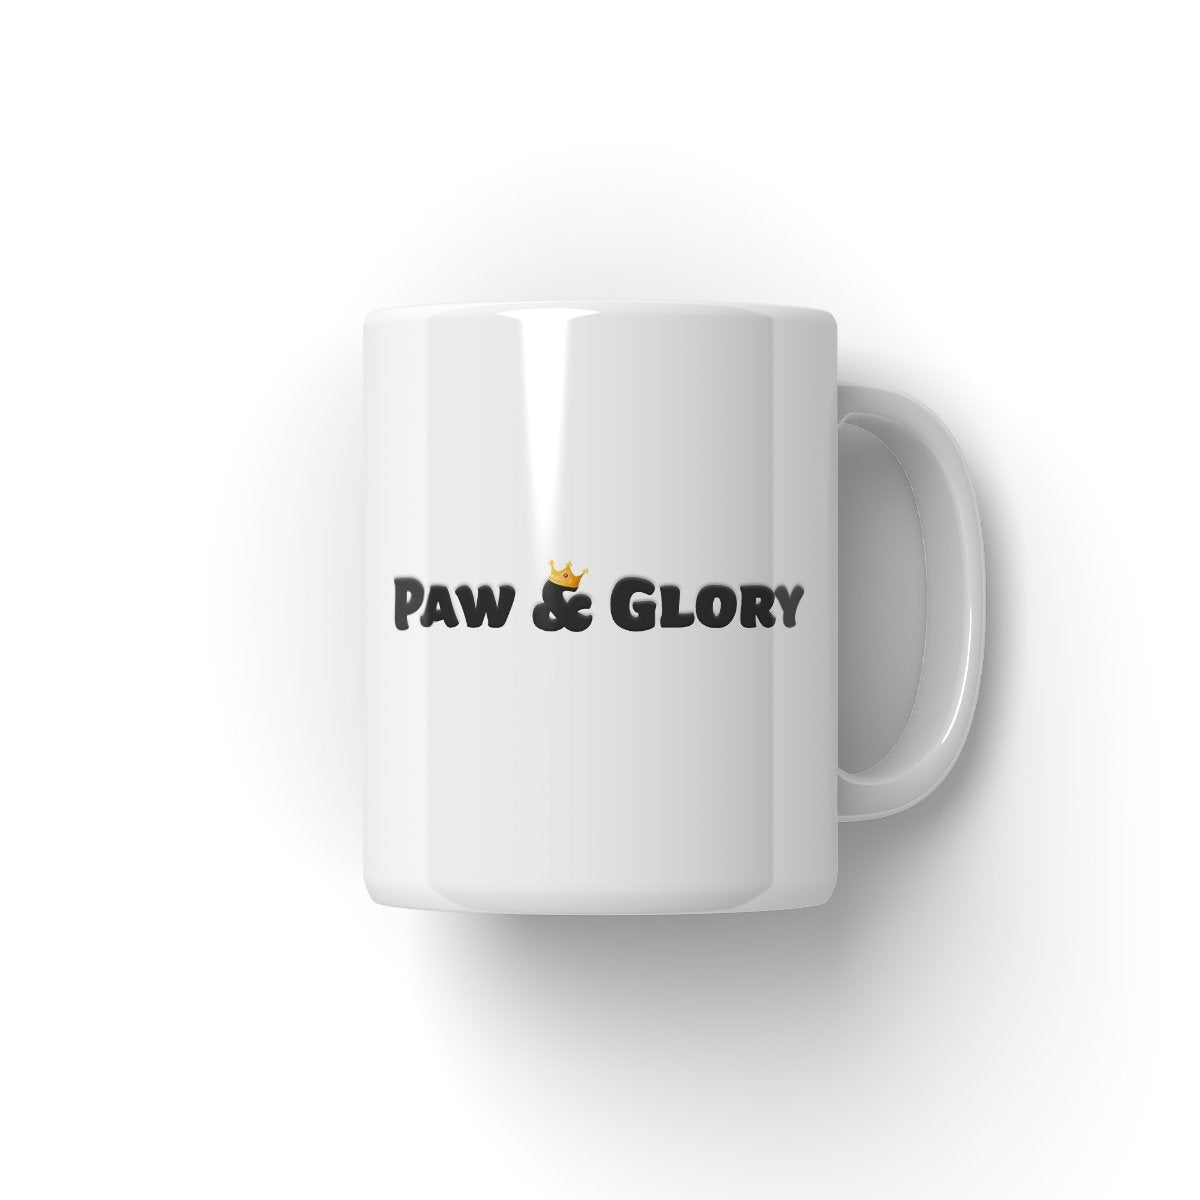 Paw & Glory, paw and glory, customized dog coffee mugs, mugs with dog and owner, personalized dog and owner mug, puppy mug, personalized dog mugs, personalized mug with dogs, Pet Portrait Mug